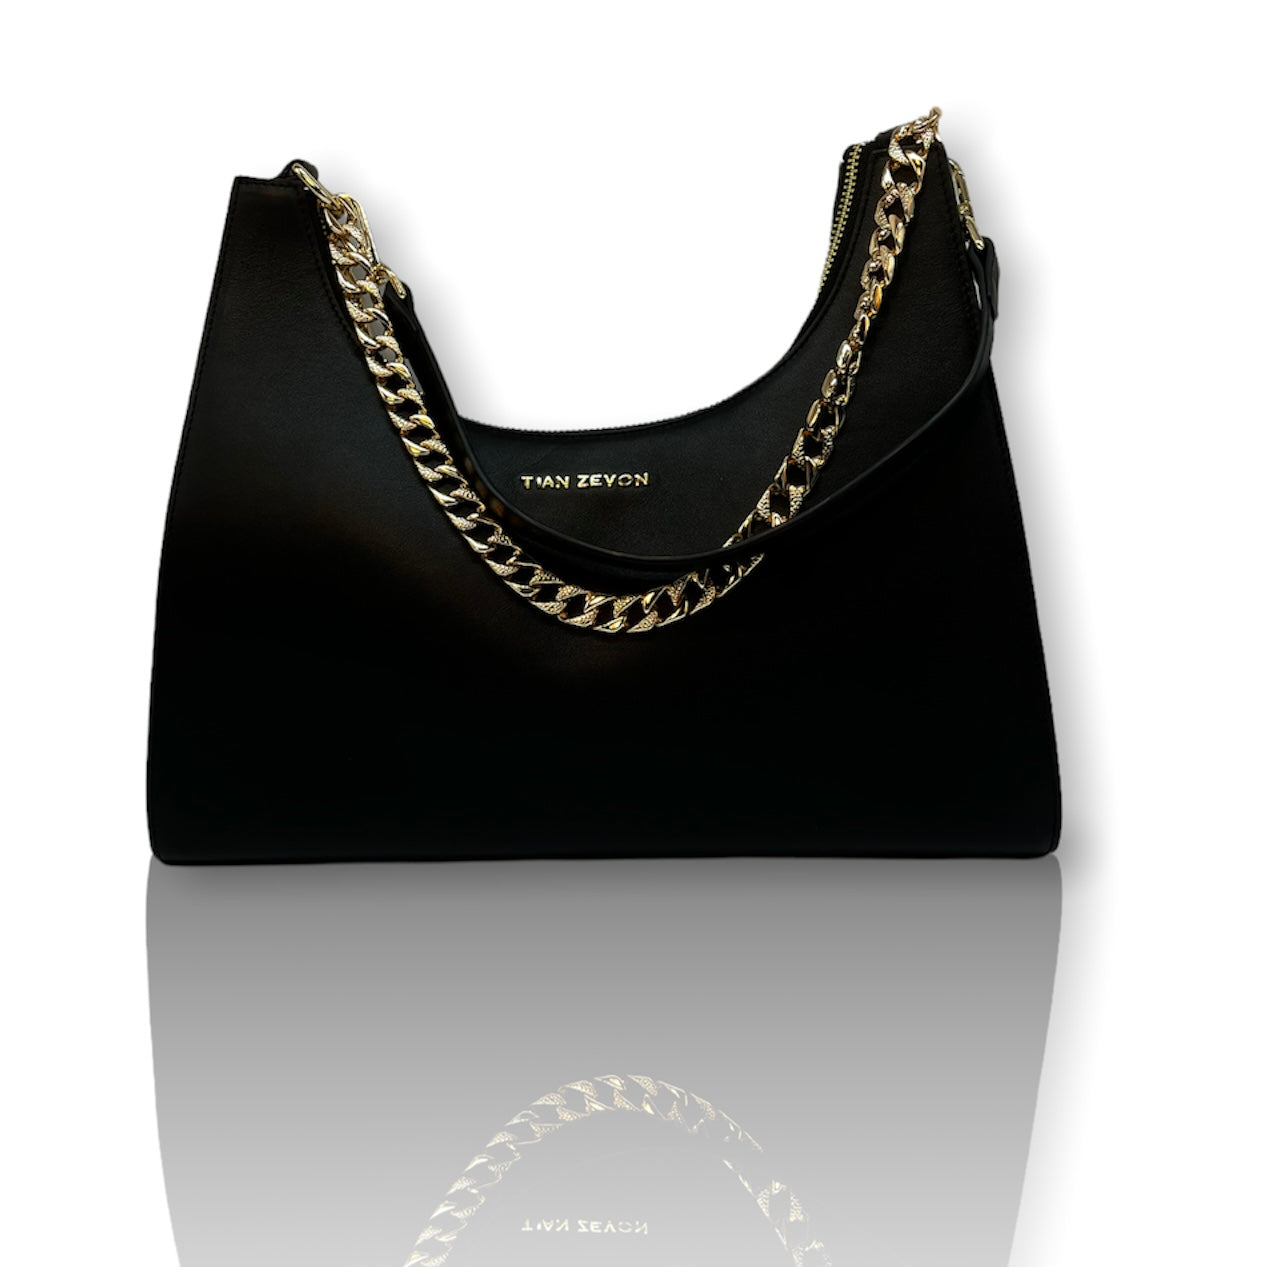 Imani genuine leather shoulder bag- Onyx